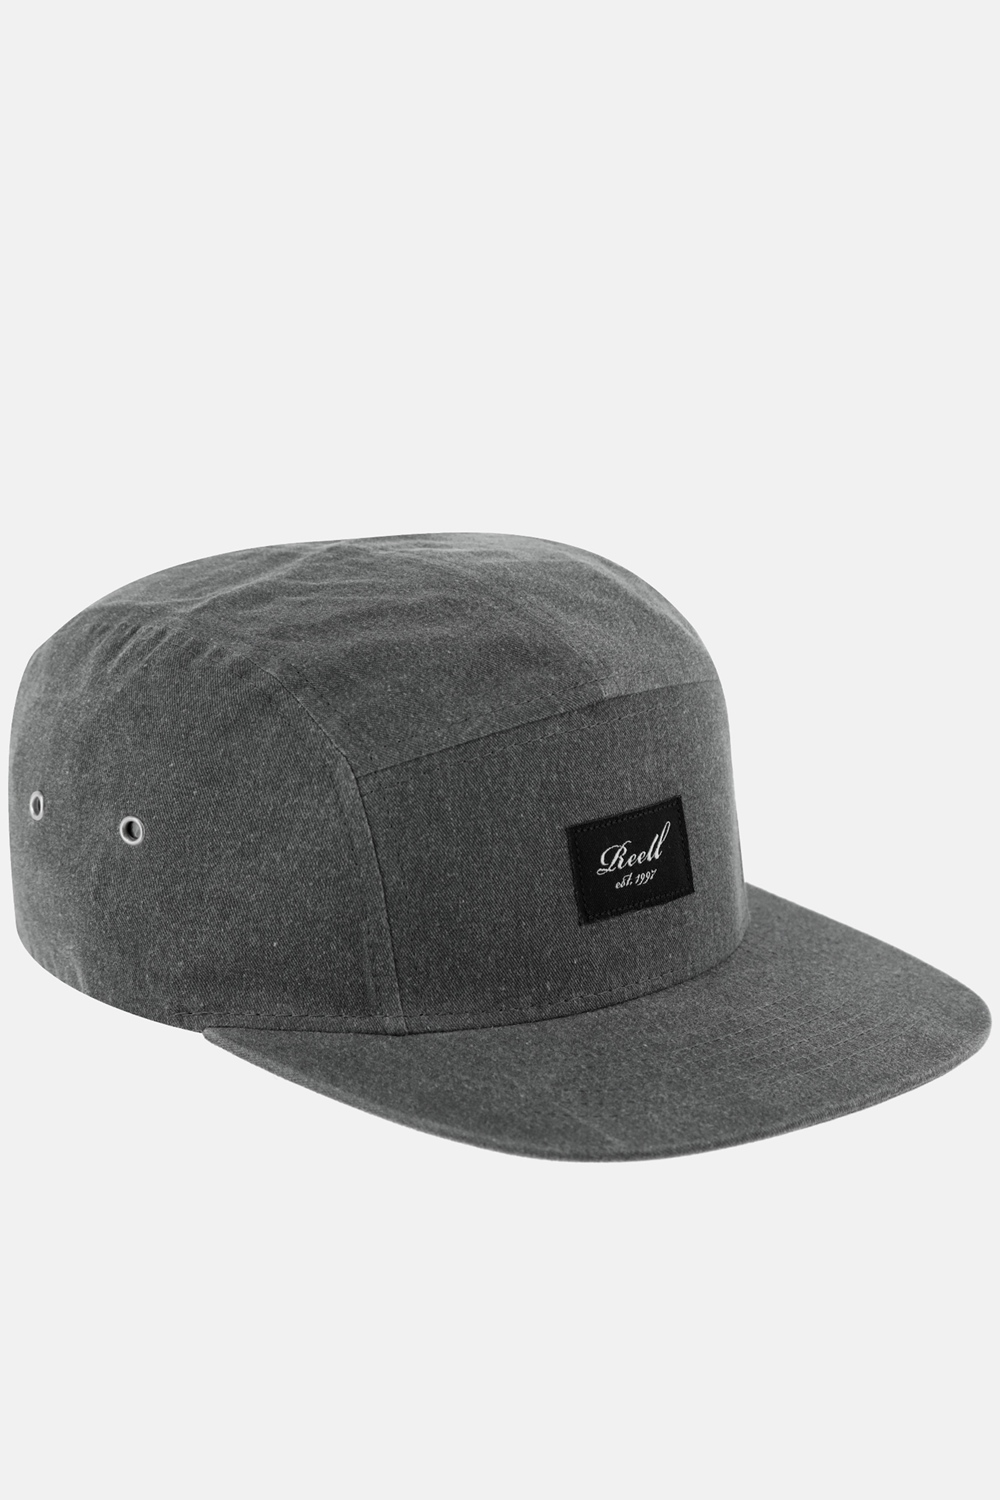 REELL 5-PANEL CAP